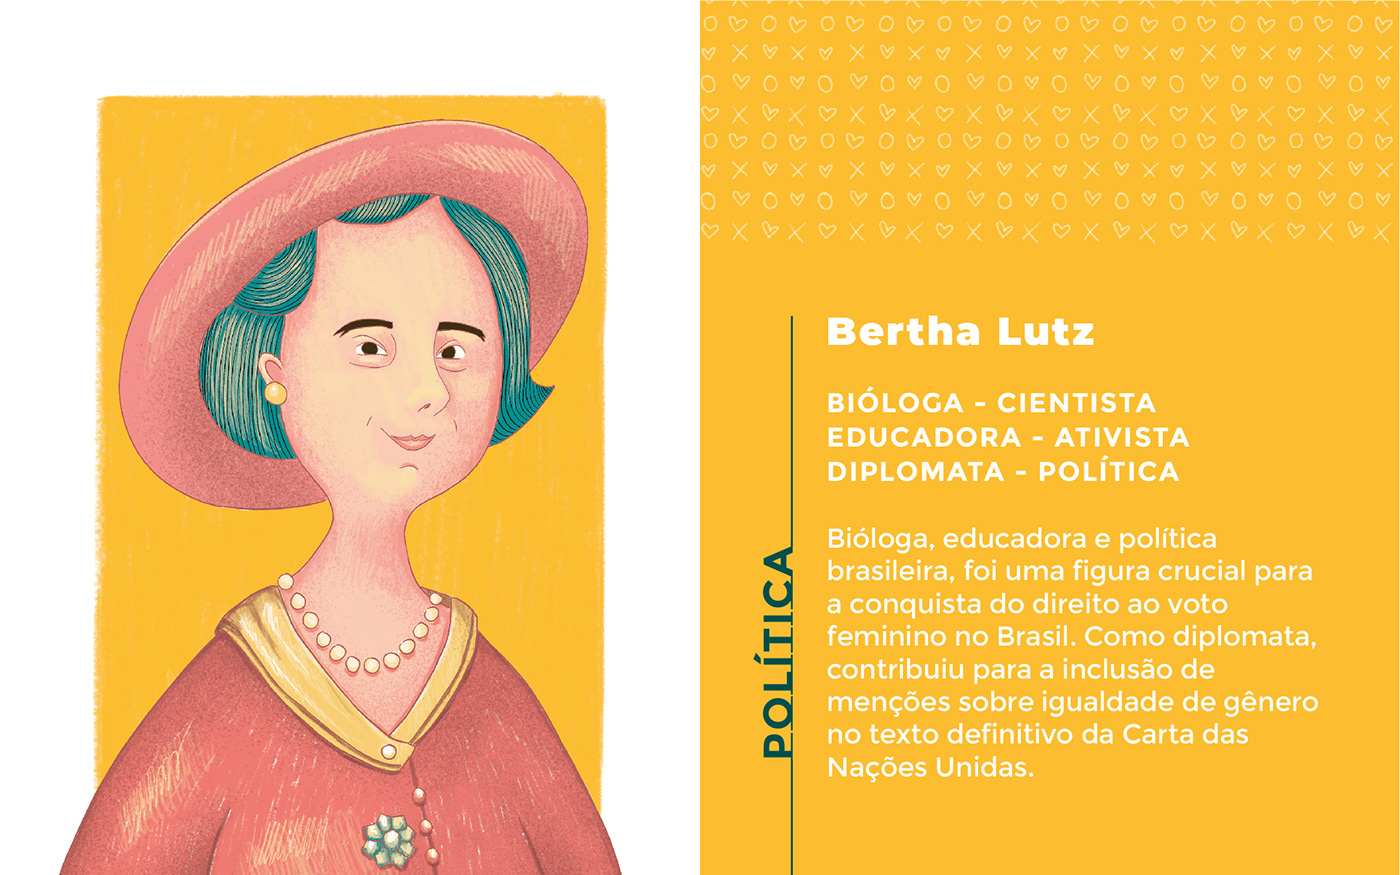 An illustrated portrait of Bertha Lutz, a brazilian scientist and politics 